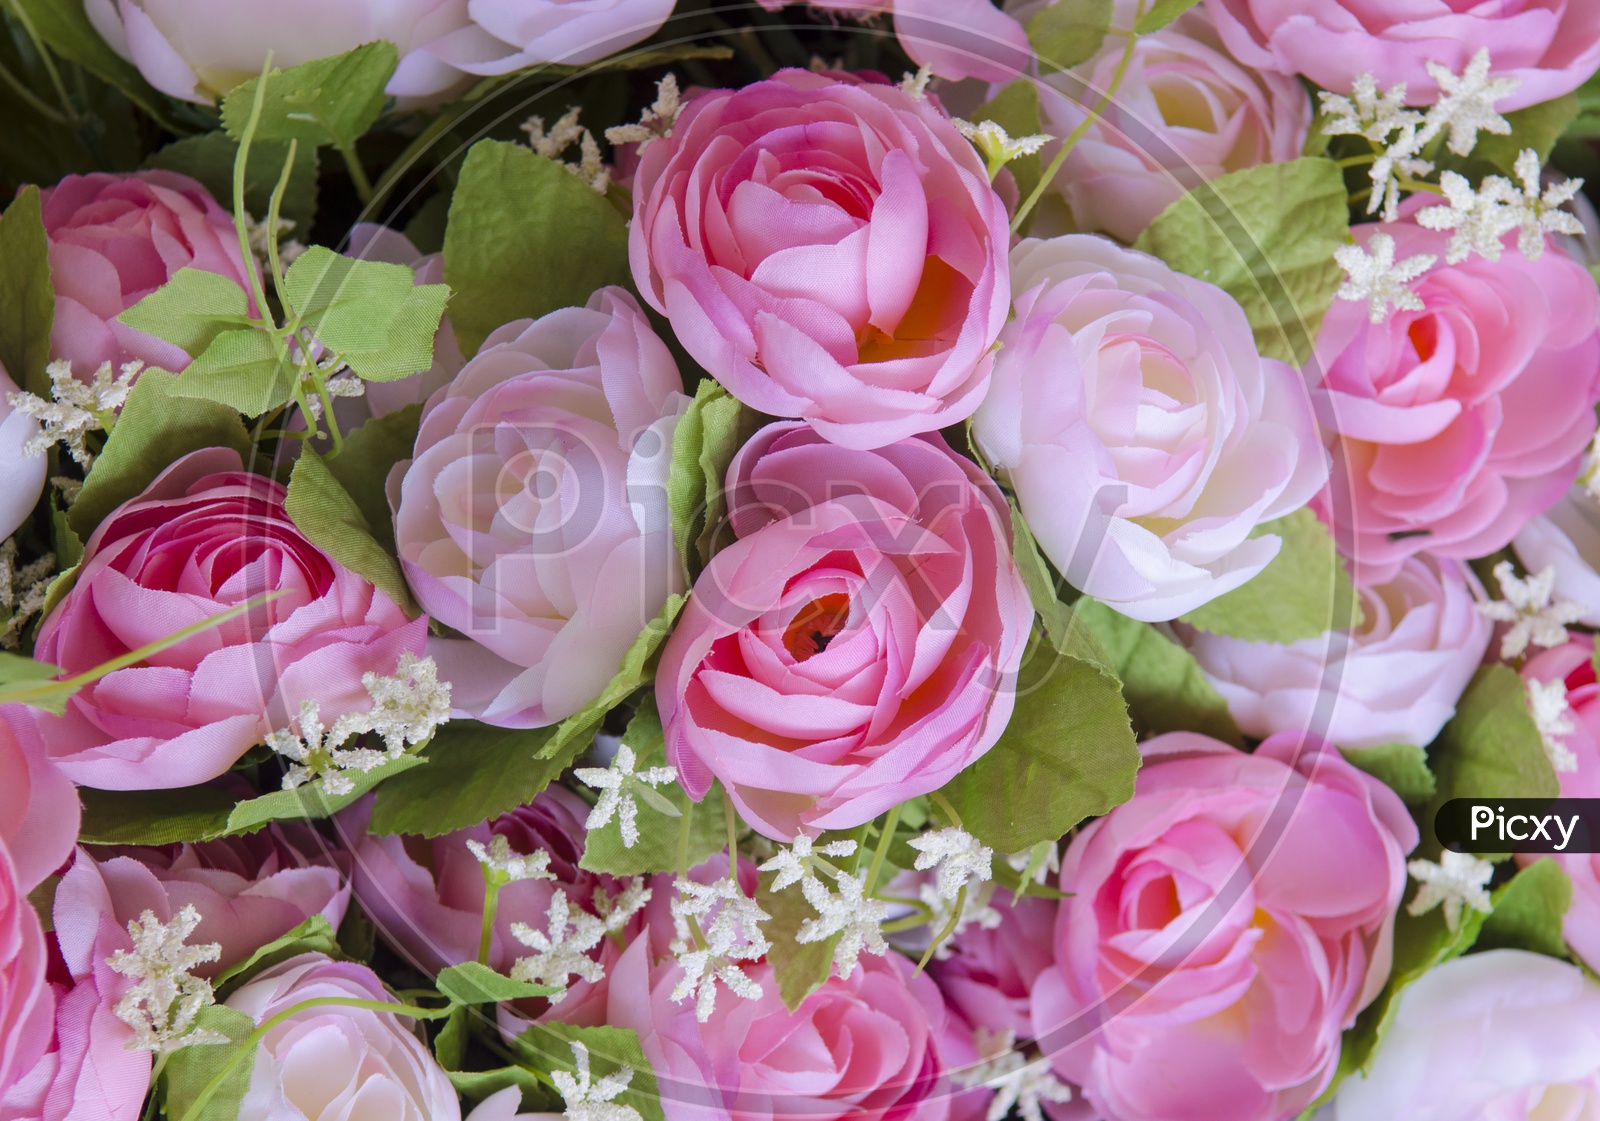 A Wedding bouquet with rose bush